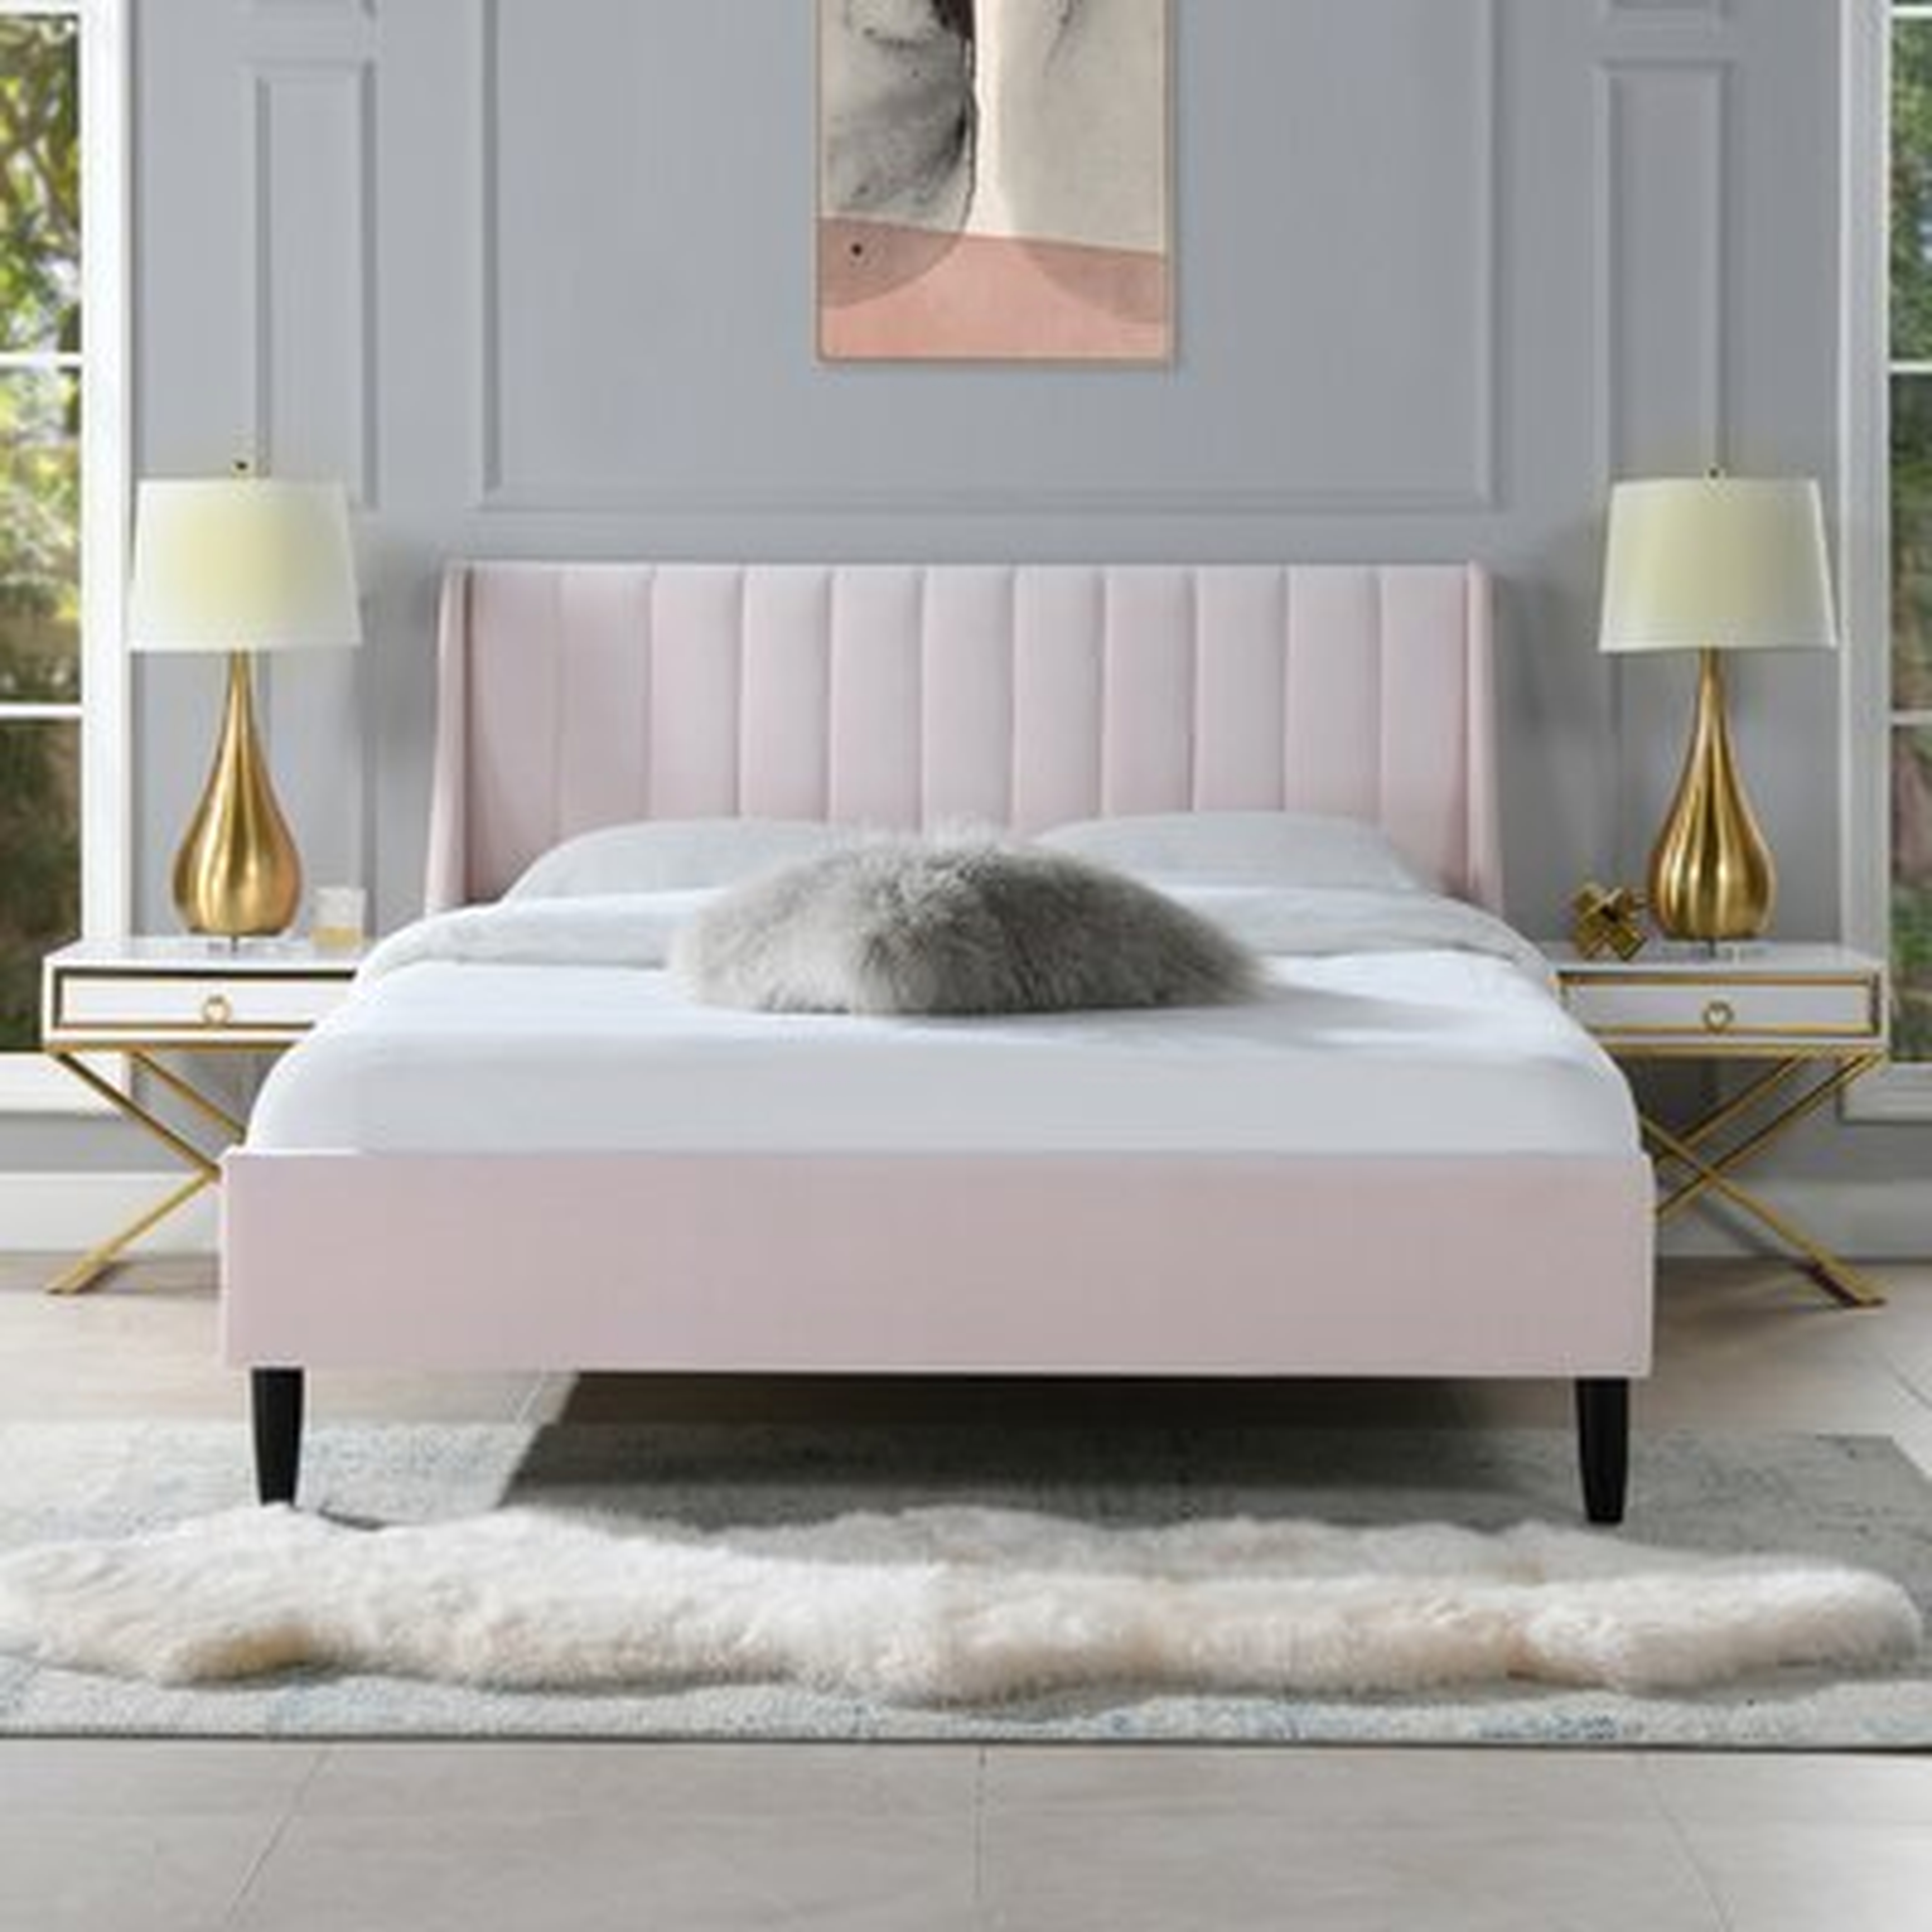 Mapletown Upholstered Low Profile Platform Bed - Wayfair